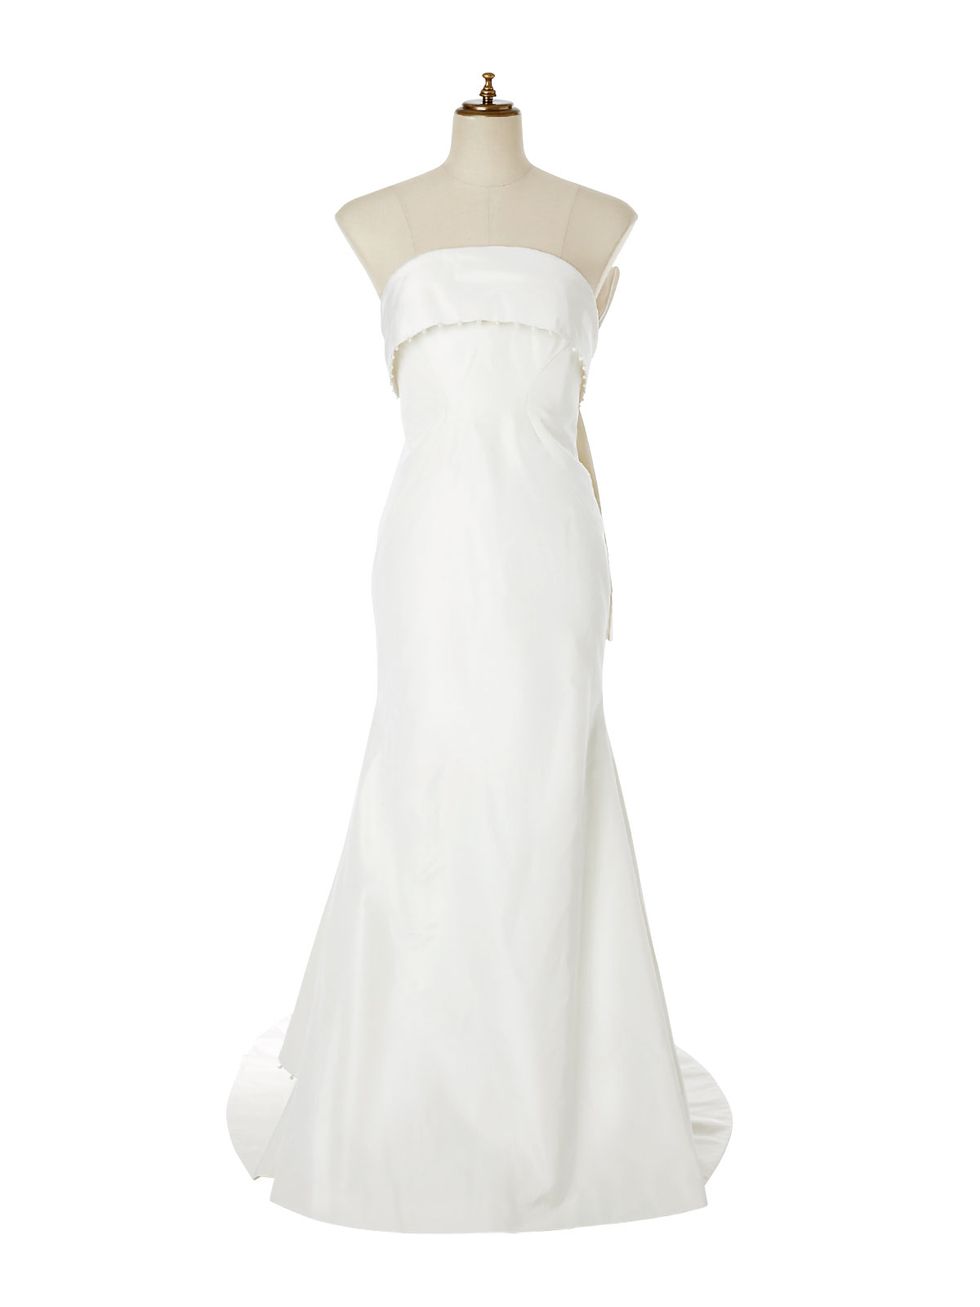 Dress, Sleeve, Textile, White, One-piece garment, Formal wear, Gown, Wedding dress, Day dress, Fashion, 